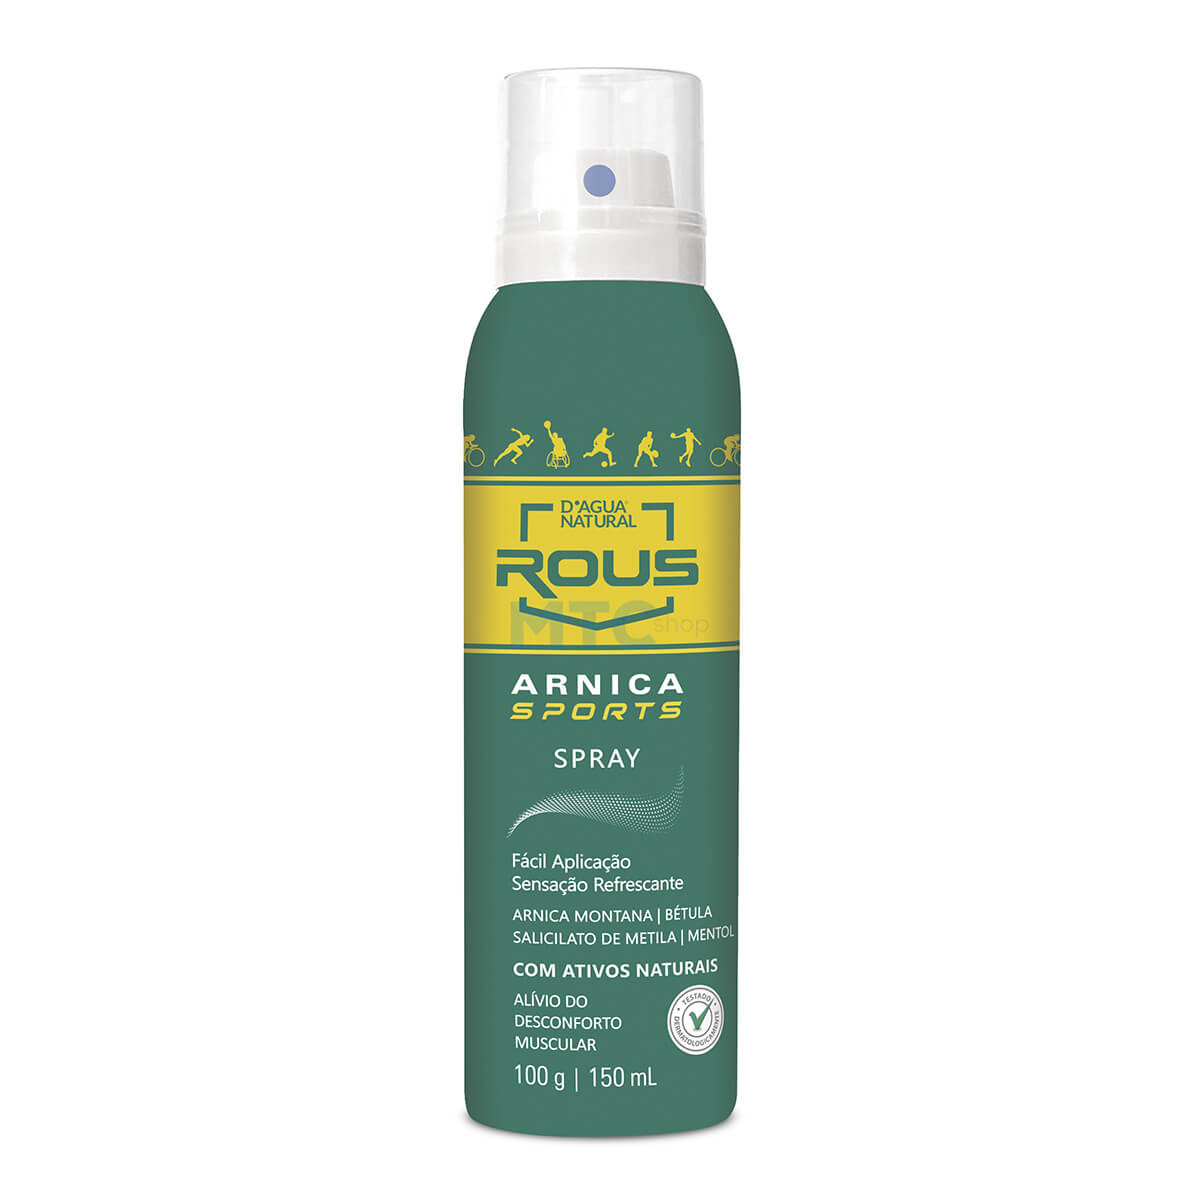 Spray Rous Arnica Sports - 100g|150ml - D'Agua Natural